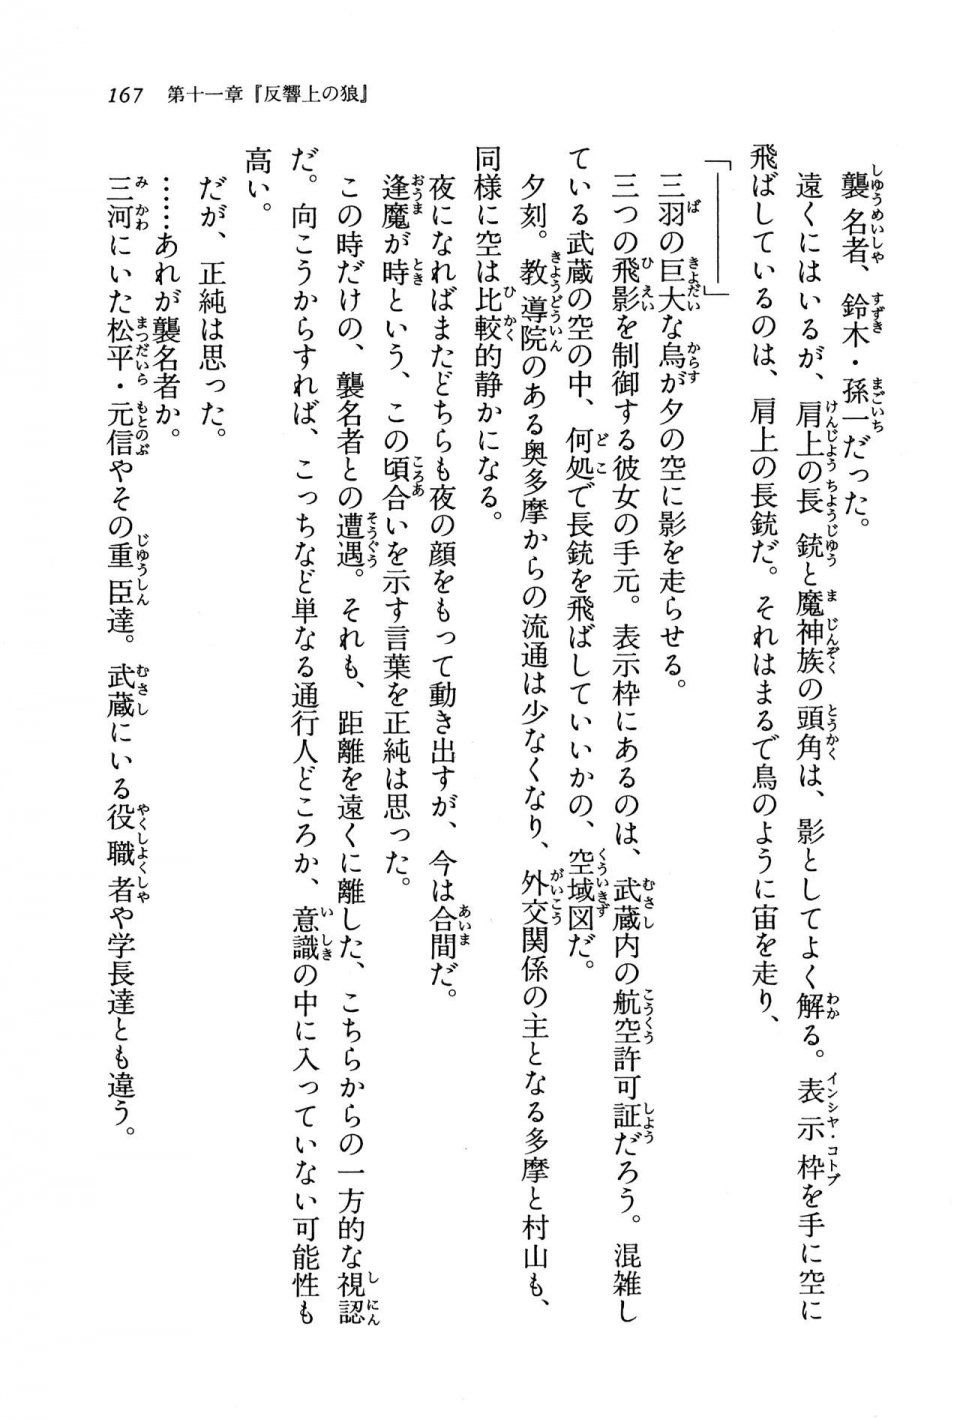 Kyoukai Senjou no Horizon BD Special Mininovel Vol 8(4B) - Photo #171